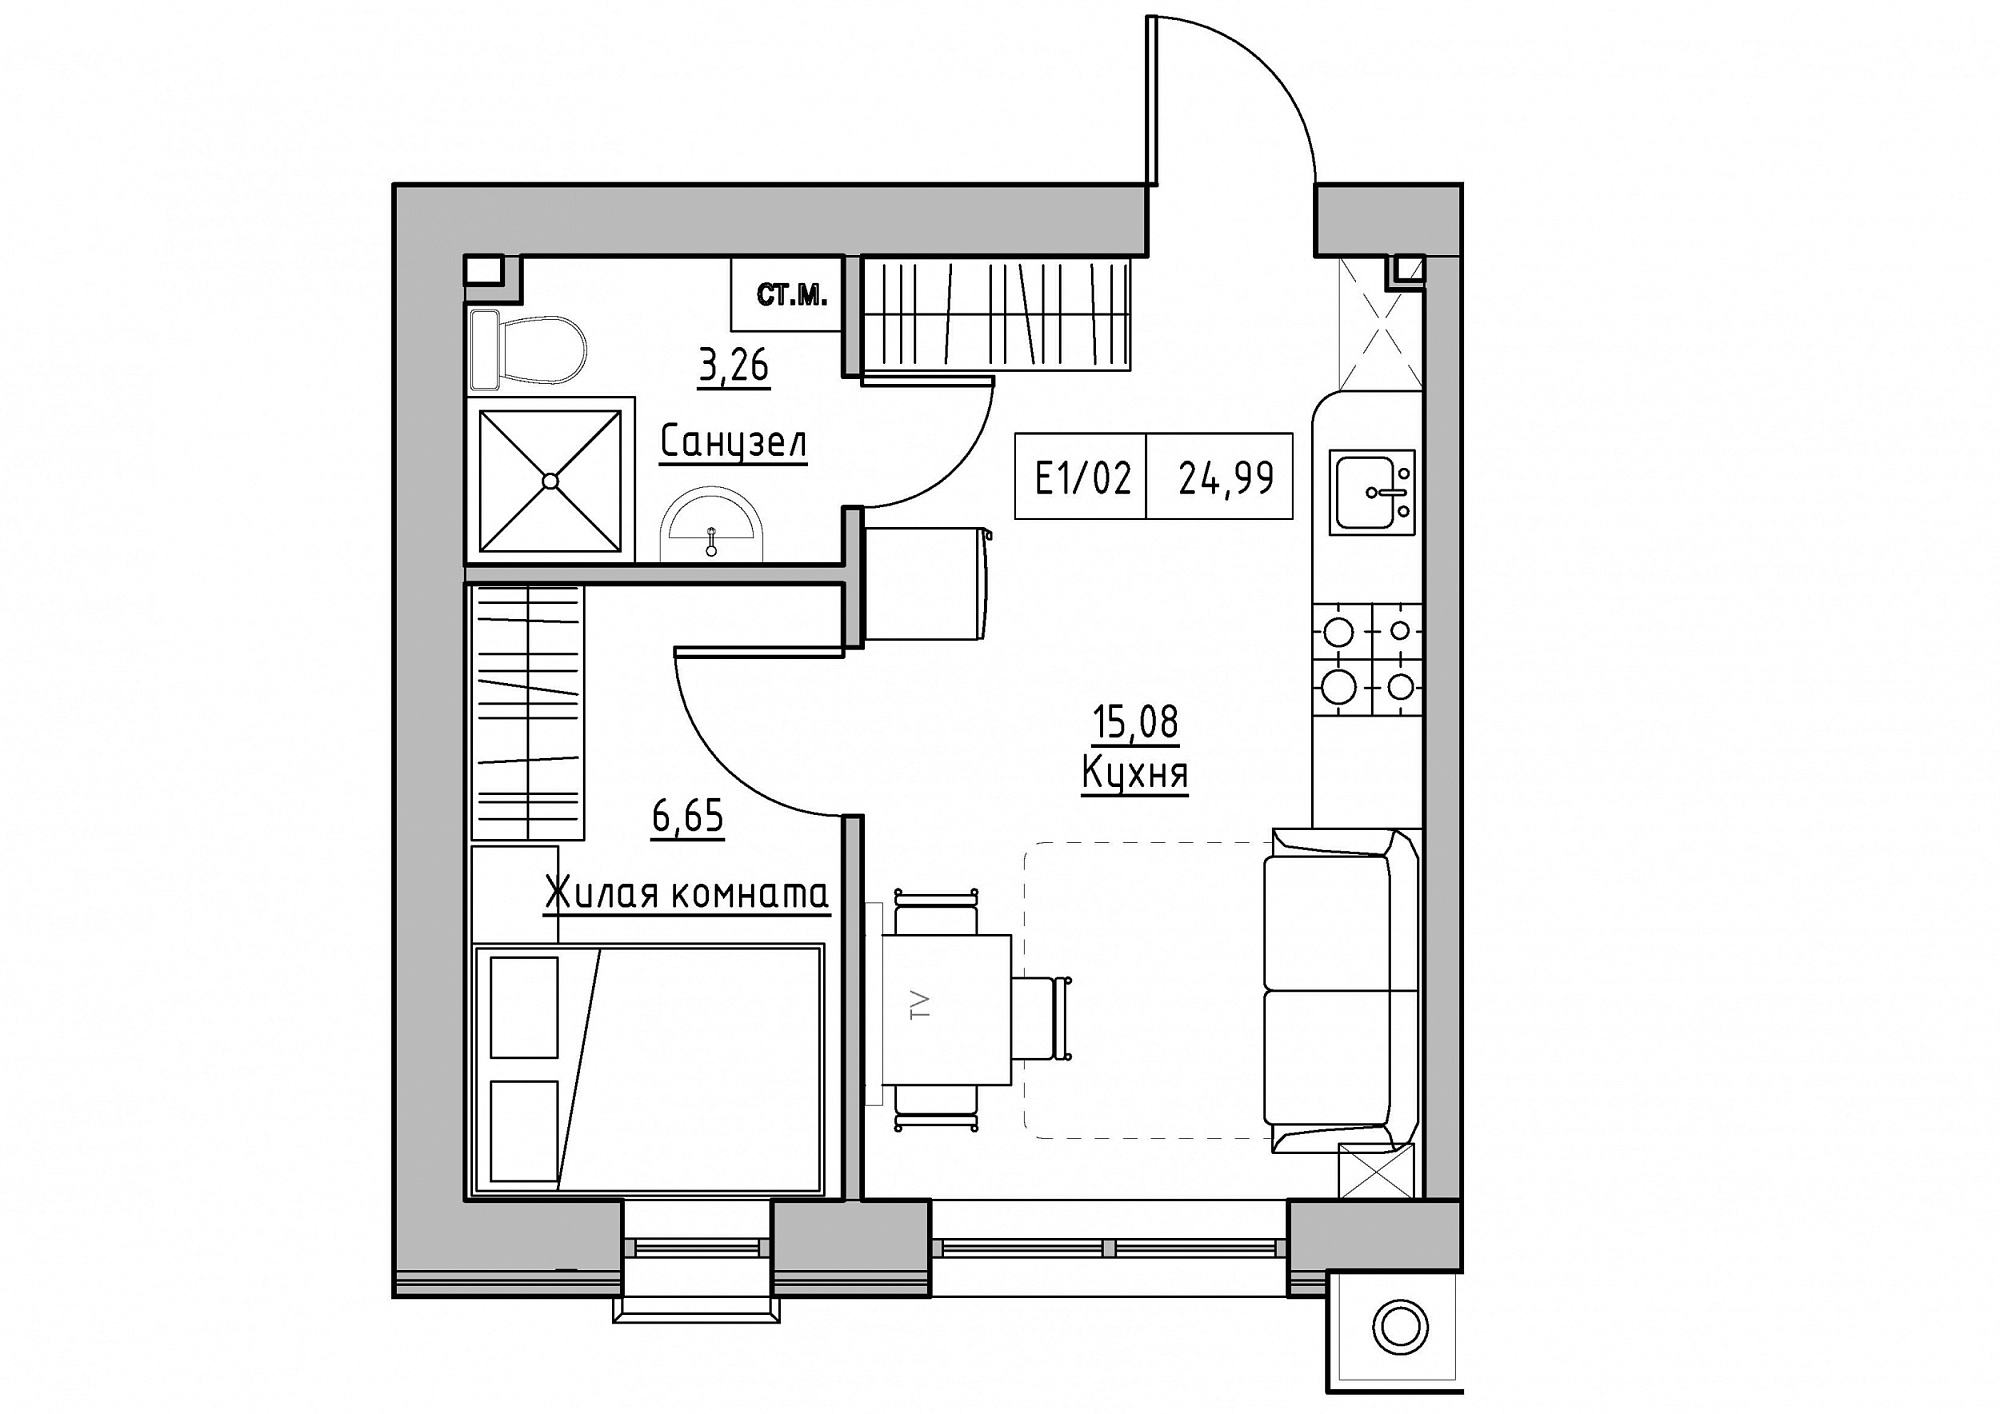 Planning 1-rm flats area 24.99m2, KS-011-04/0012.